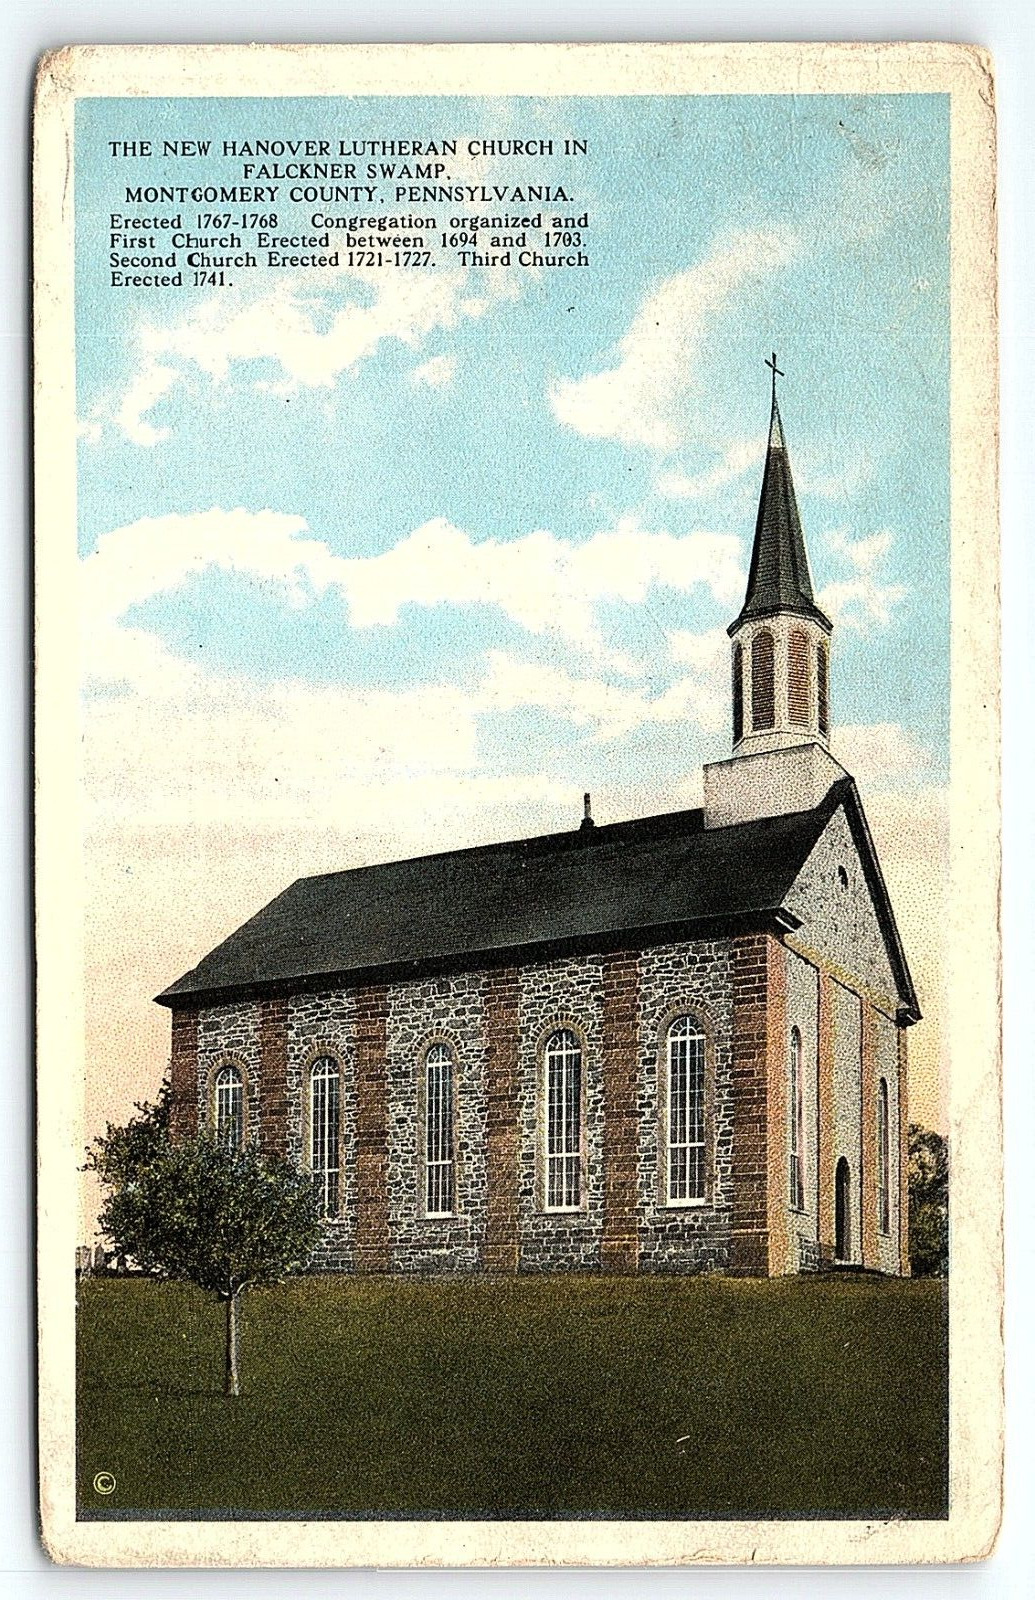 MONTGOMERY COUNTY PA NEW HANOVER LUTHERAN CHURCH FALCKNER SWAMP POSTCARD P4584